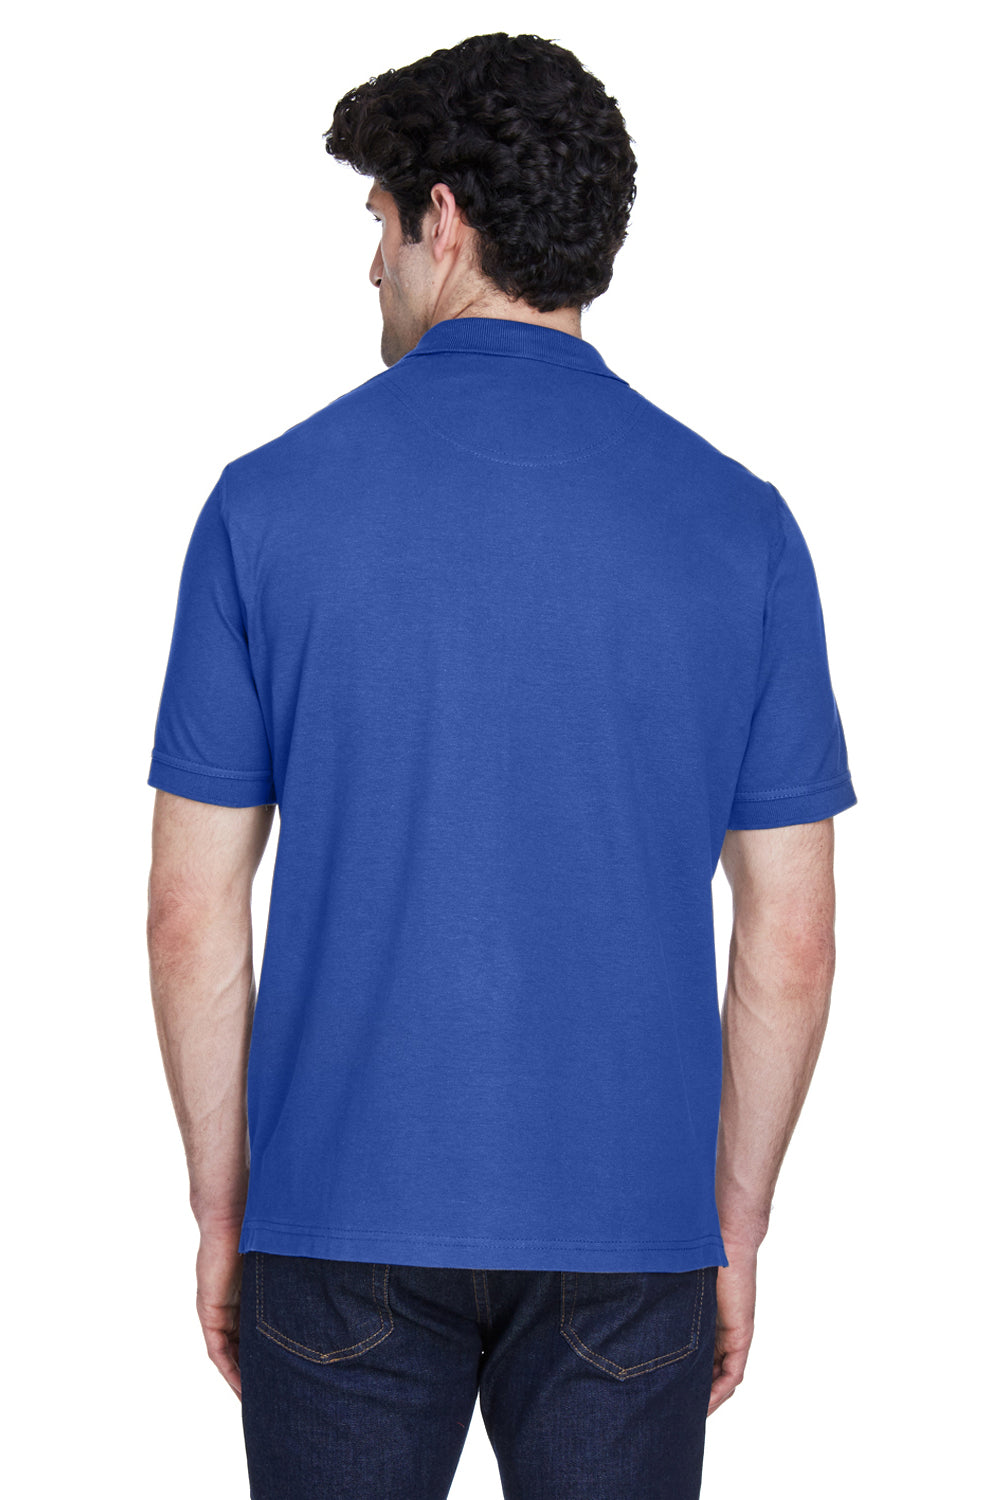 UltraClub 8535 Mens Classic Short Sleeve Polo Shirt Royal Blue Back